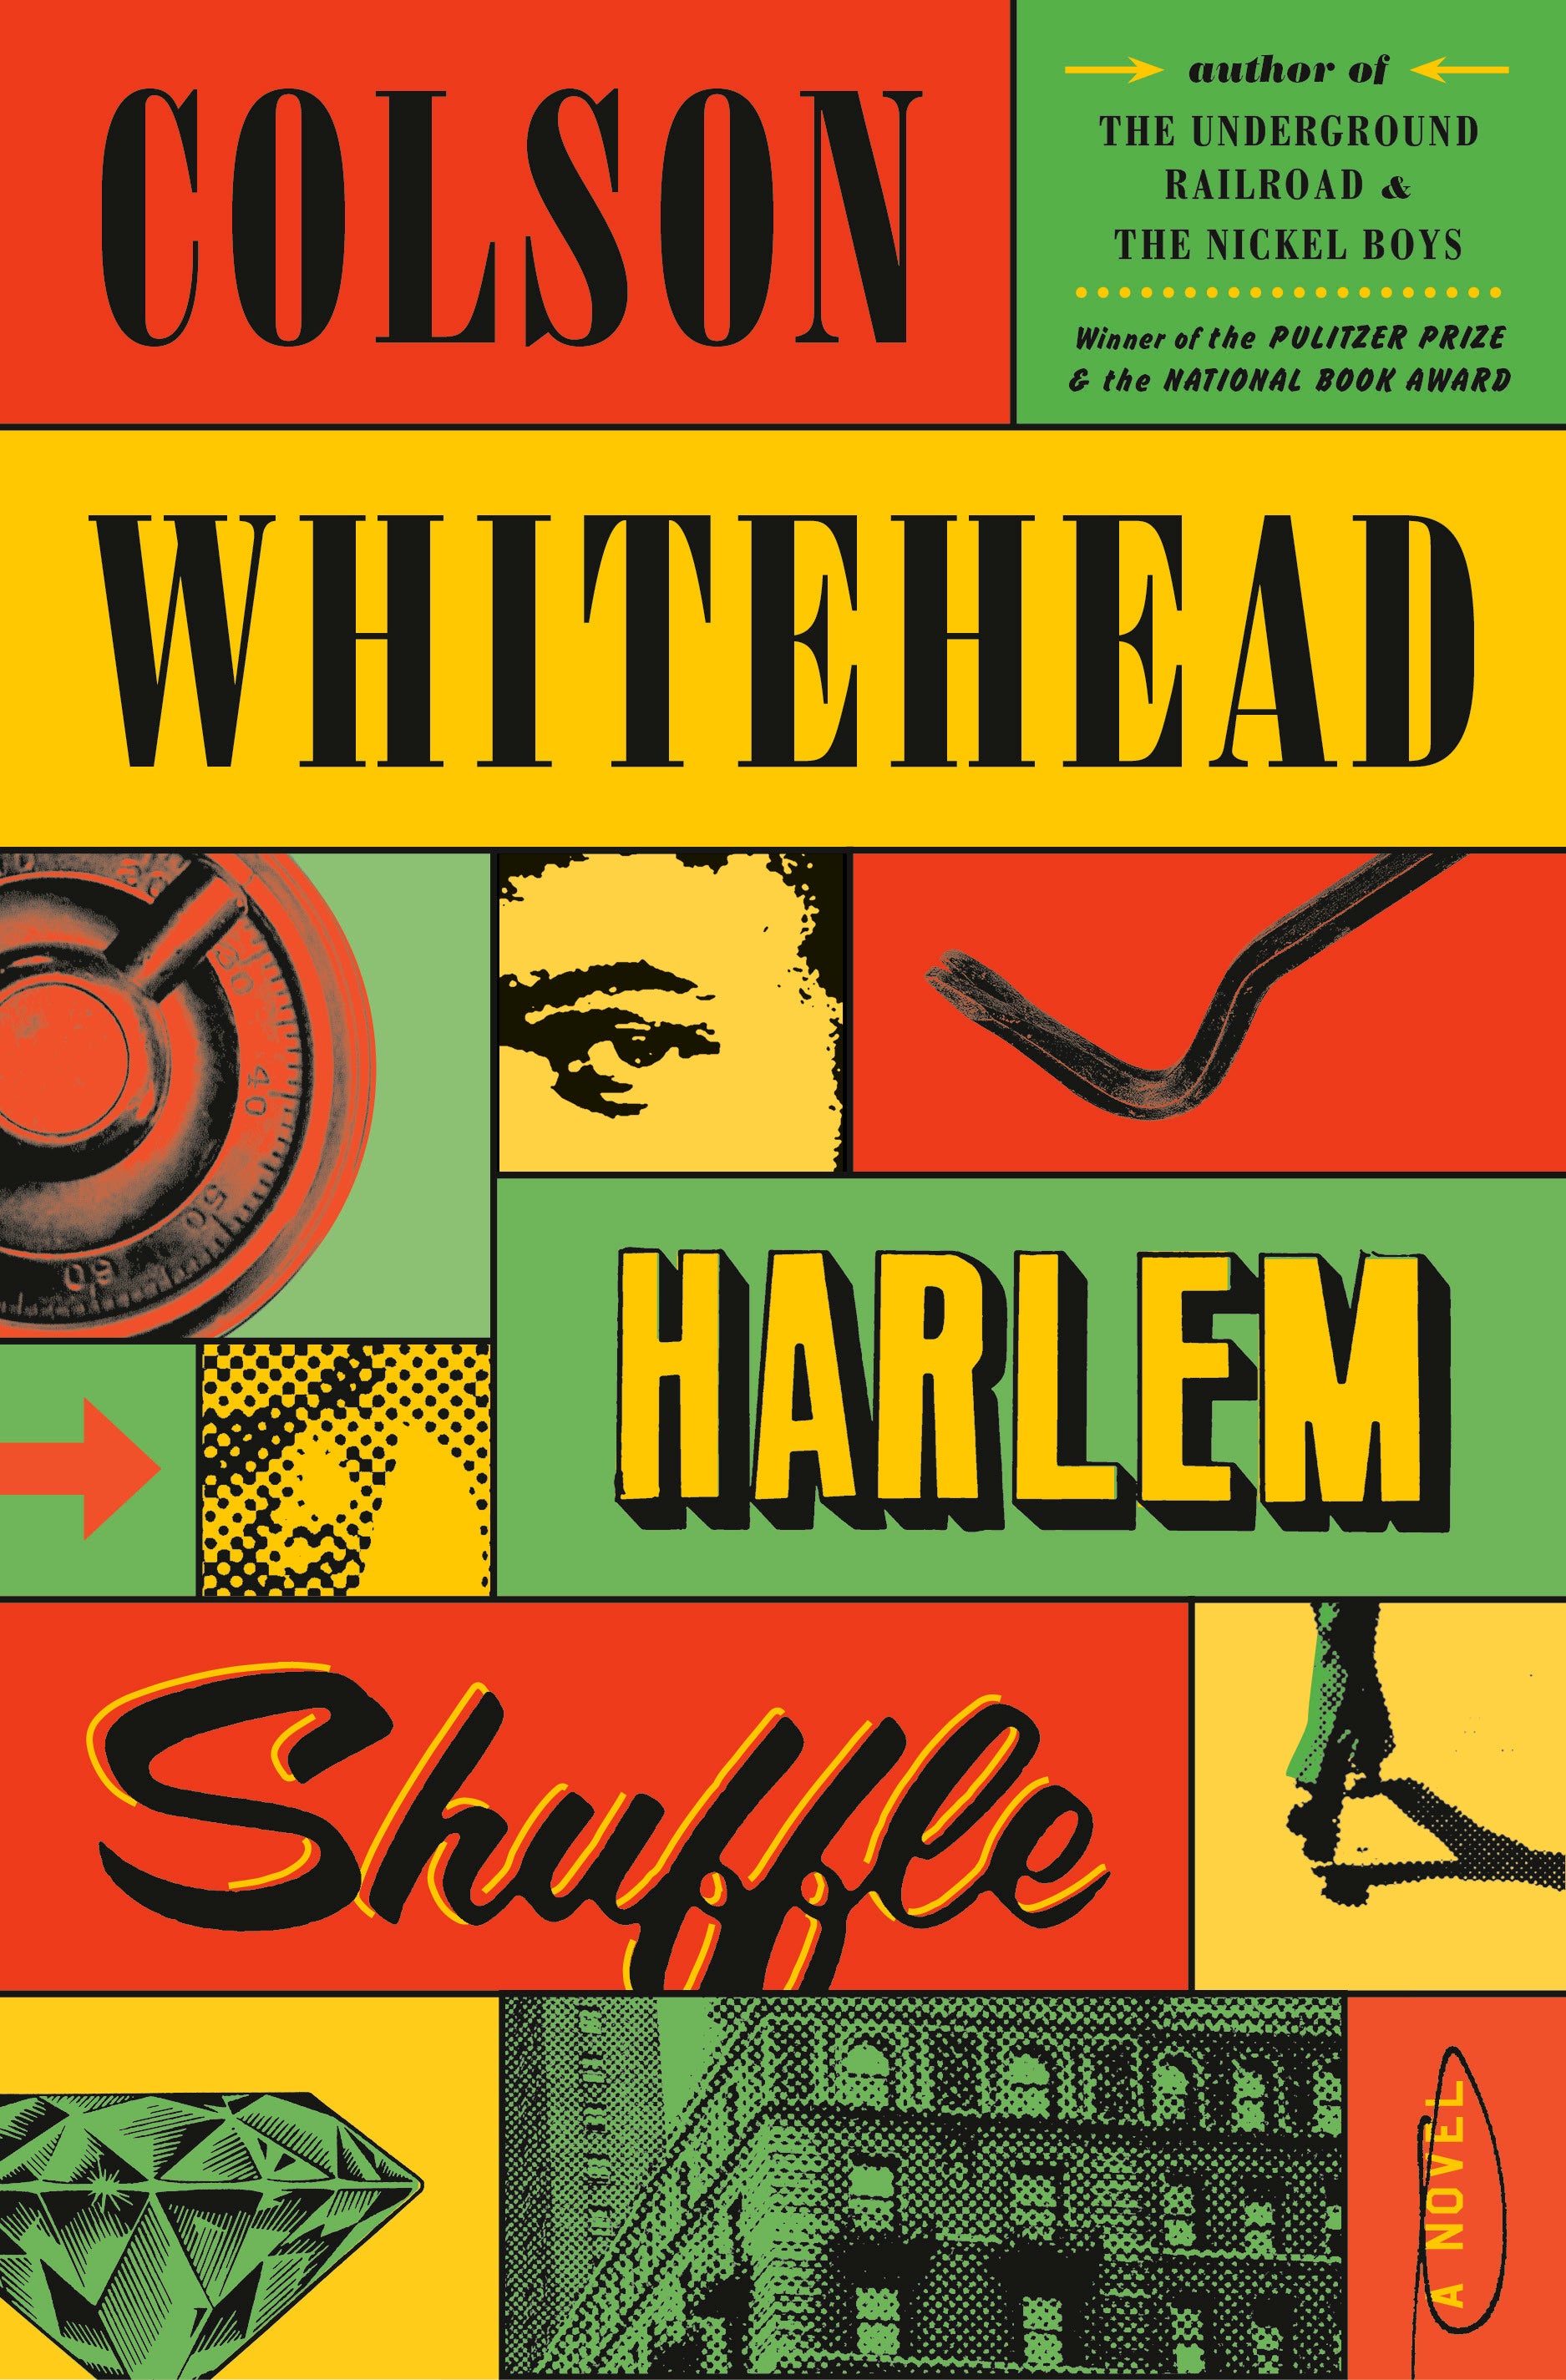 Book Review - Harlem Shuffle